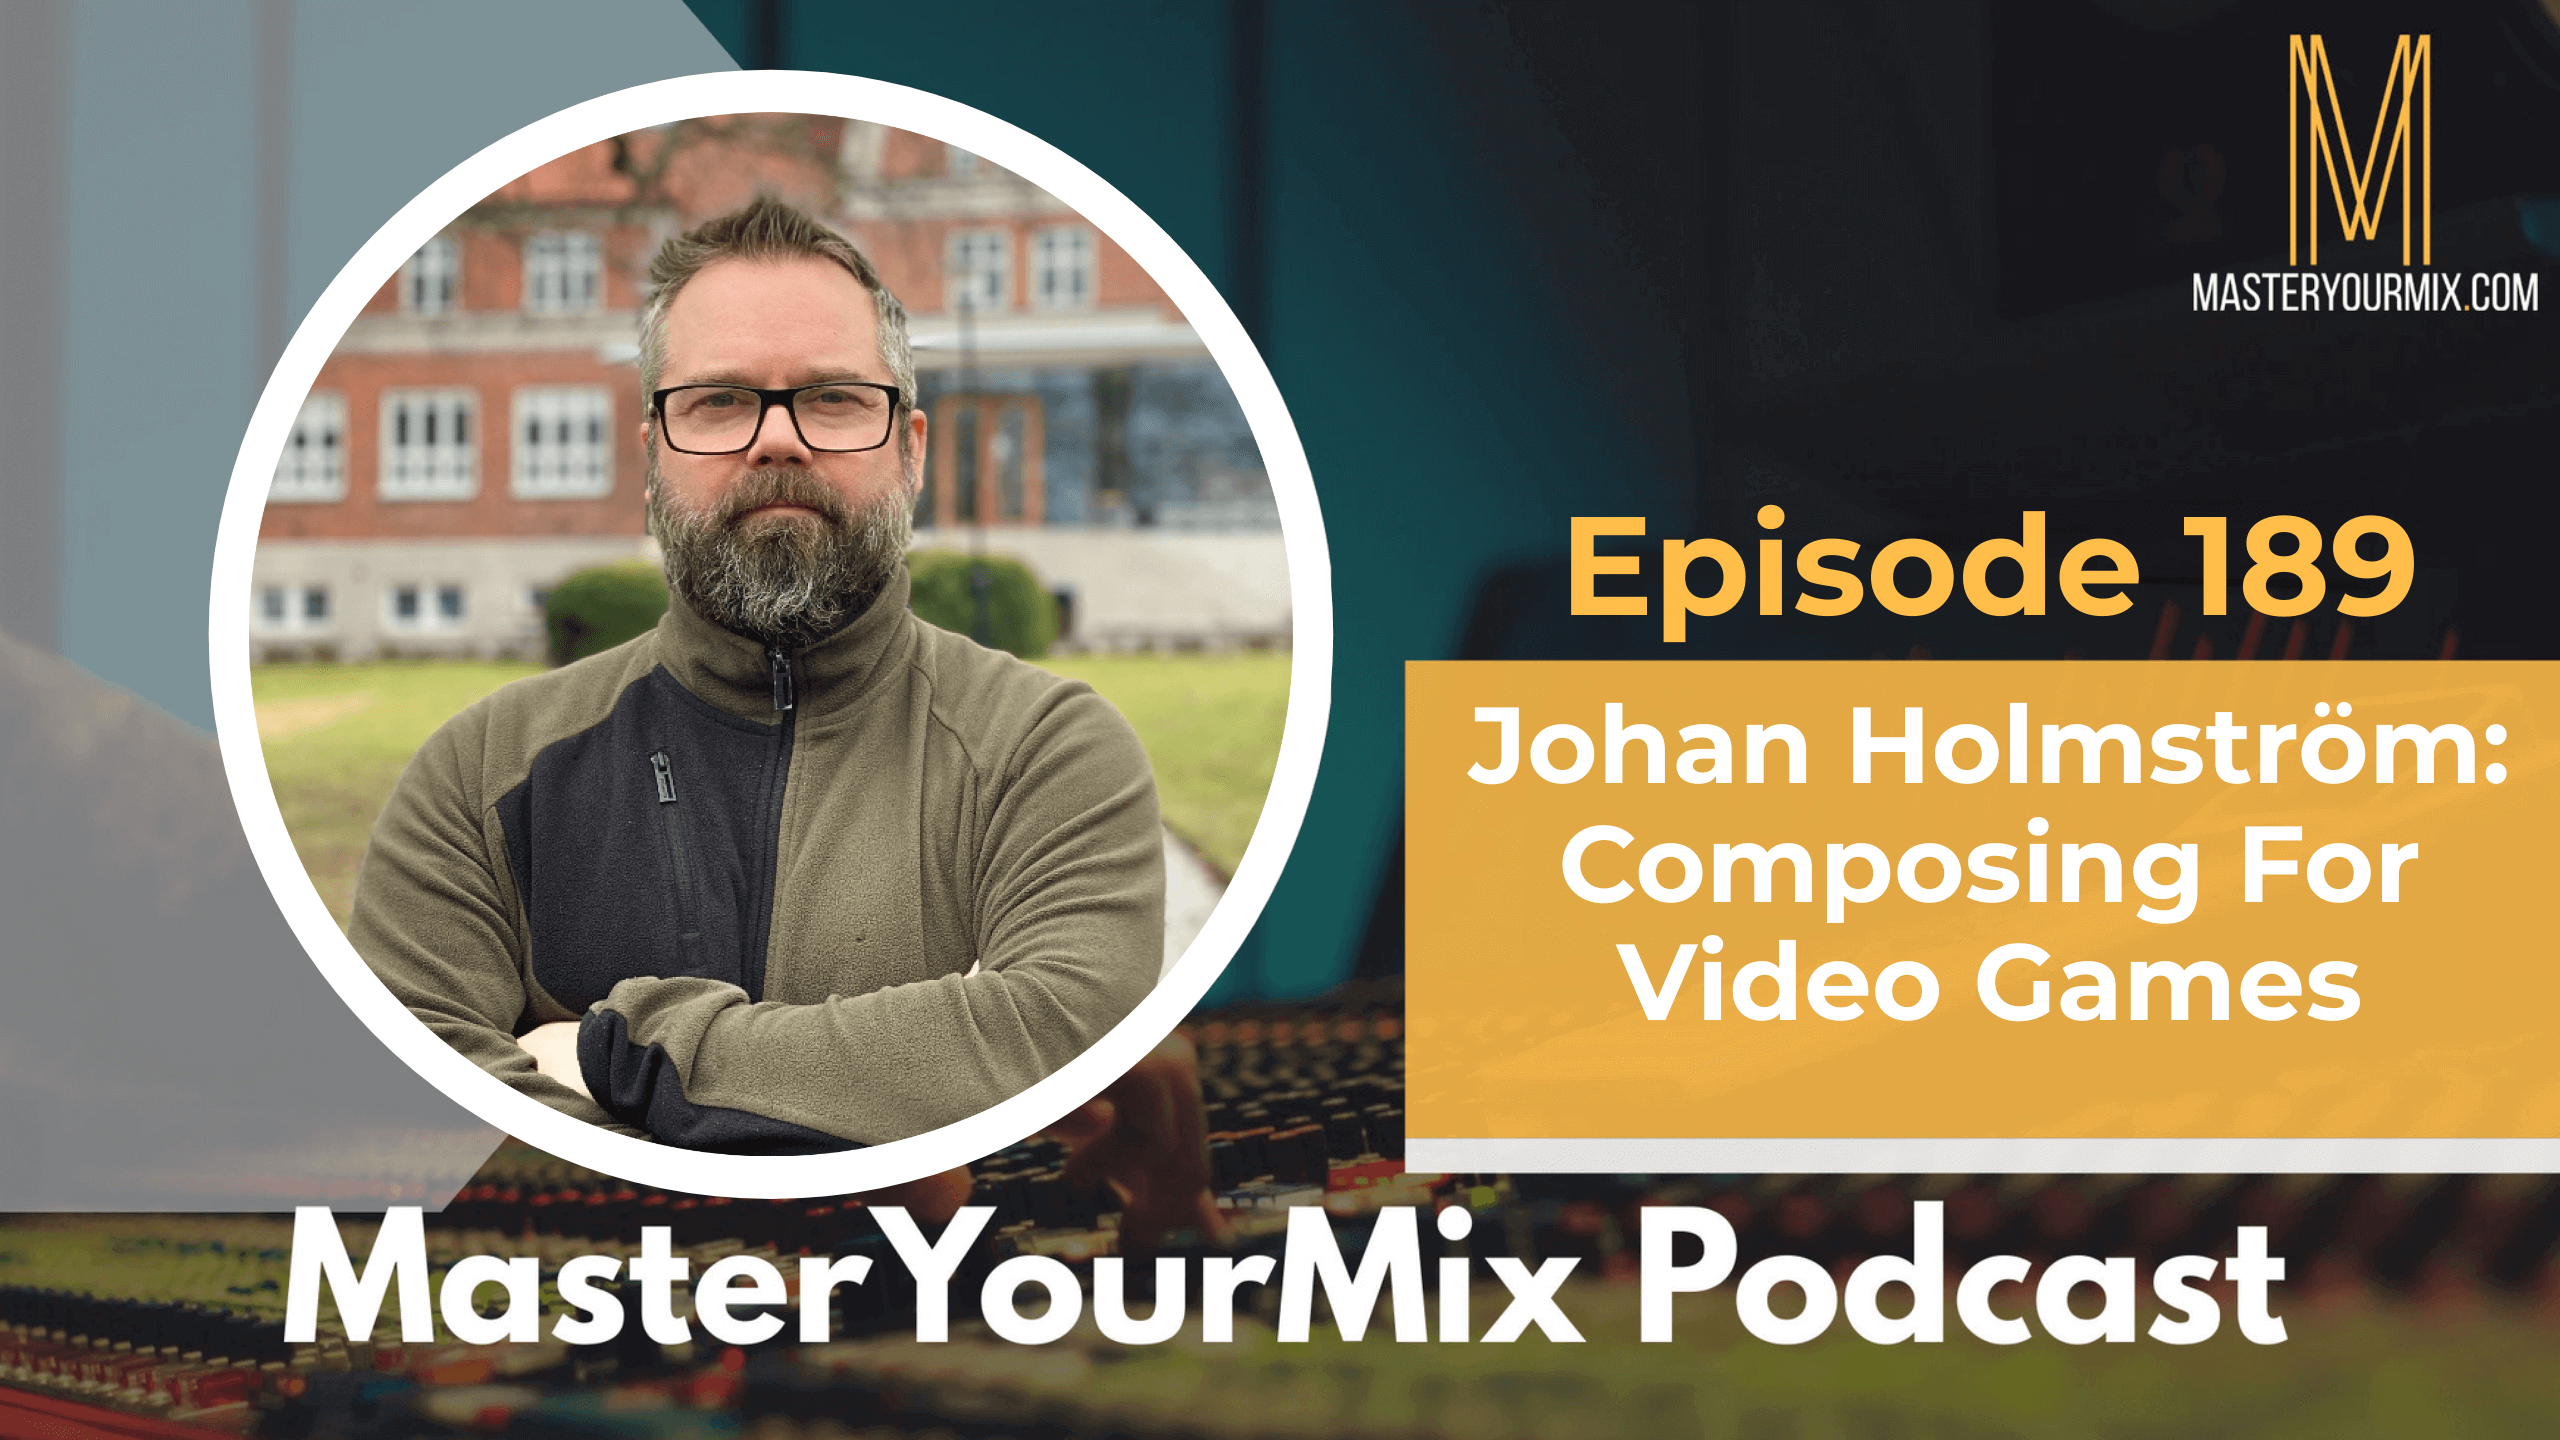 master your mix podcast, ep 189 johan holmström